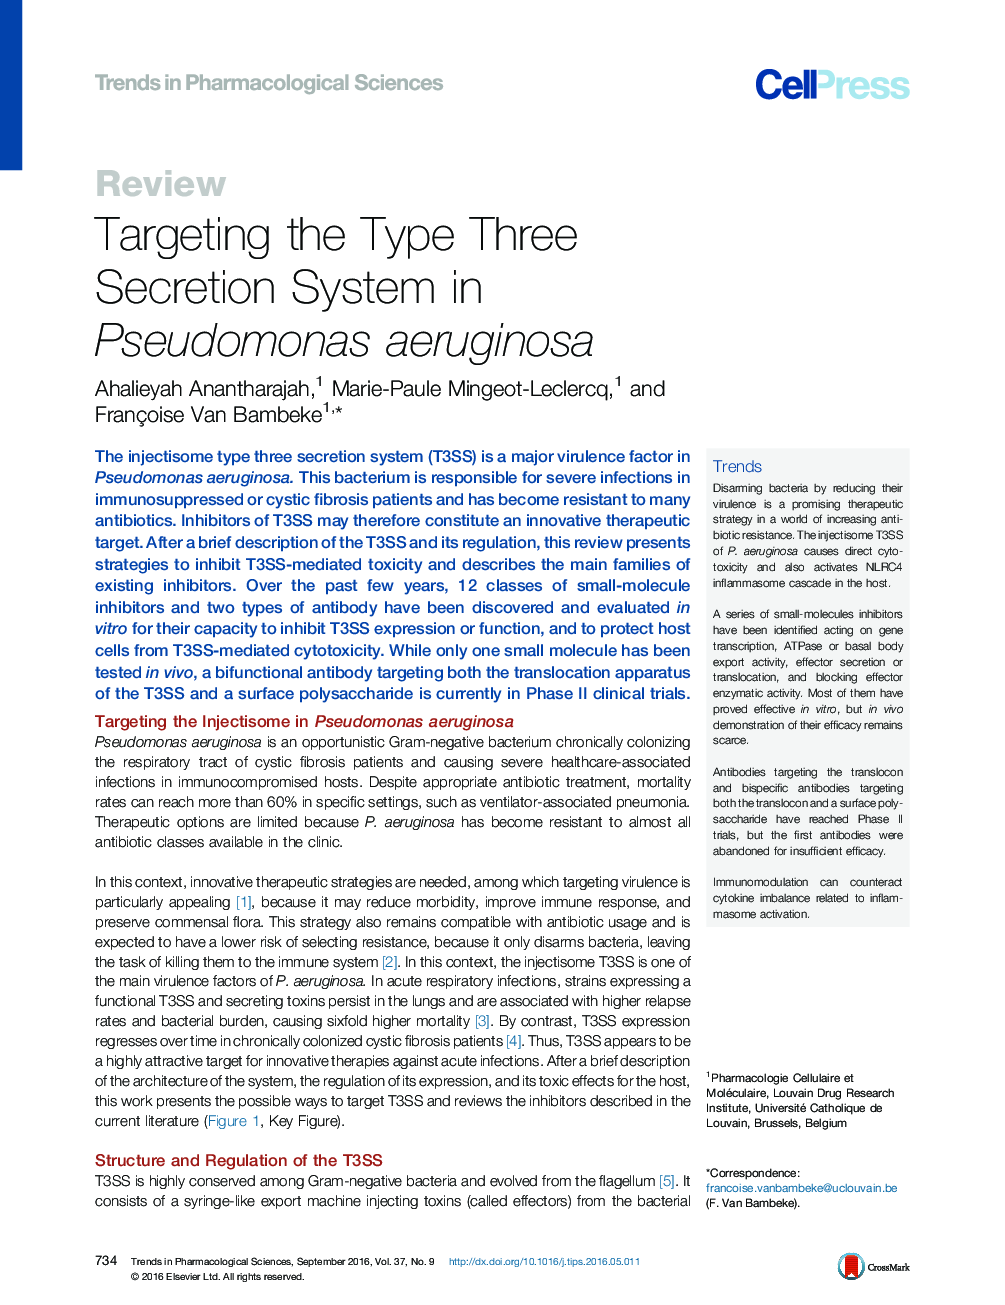 Targeting the Type Three Secretion System in Pseudomonas aeruginosa